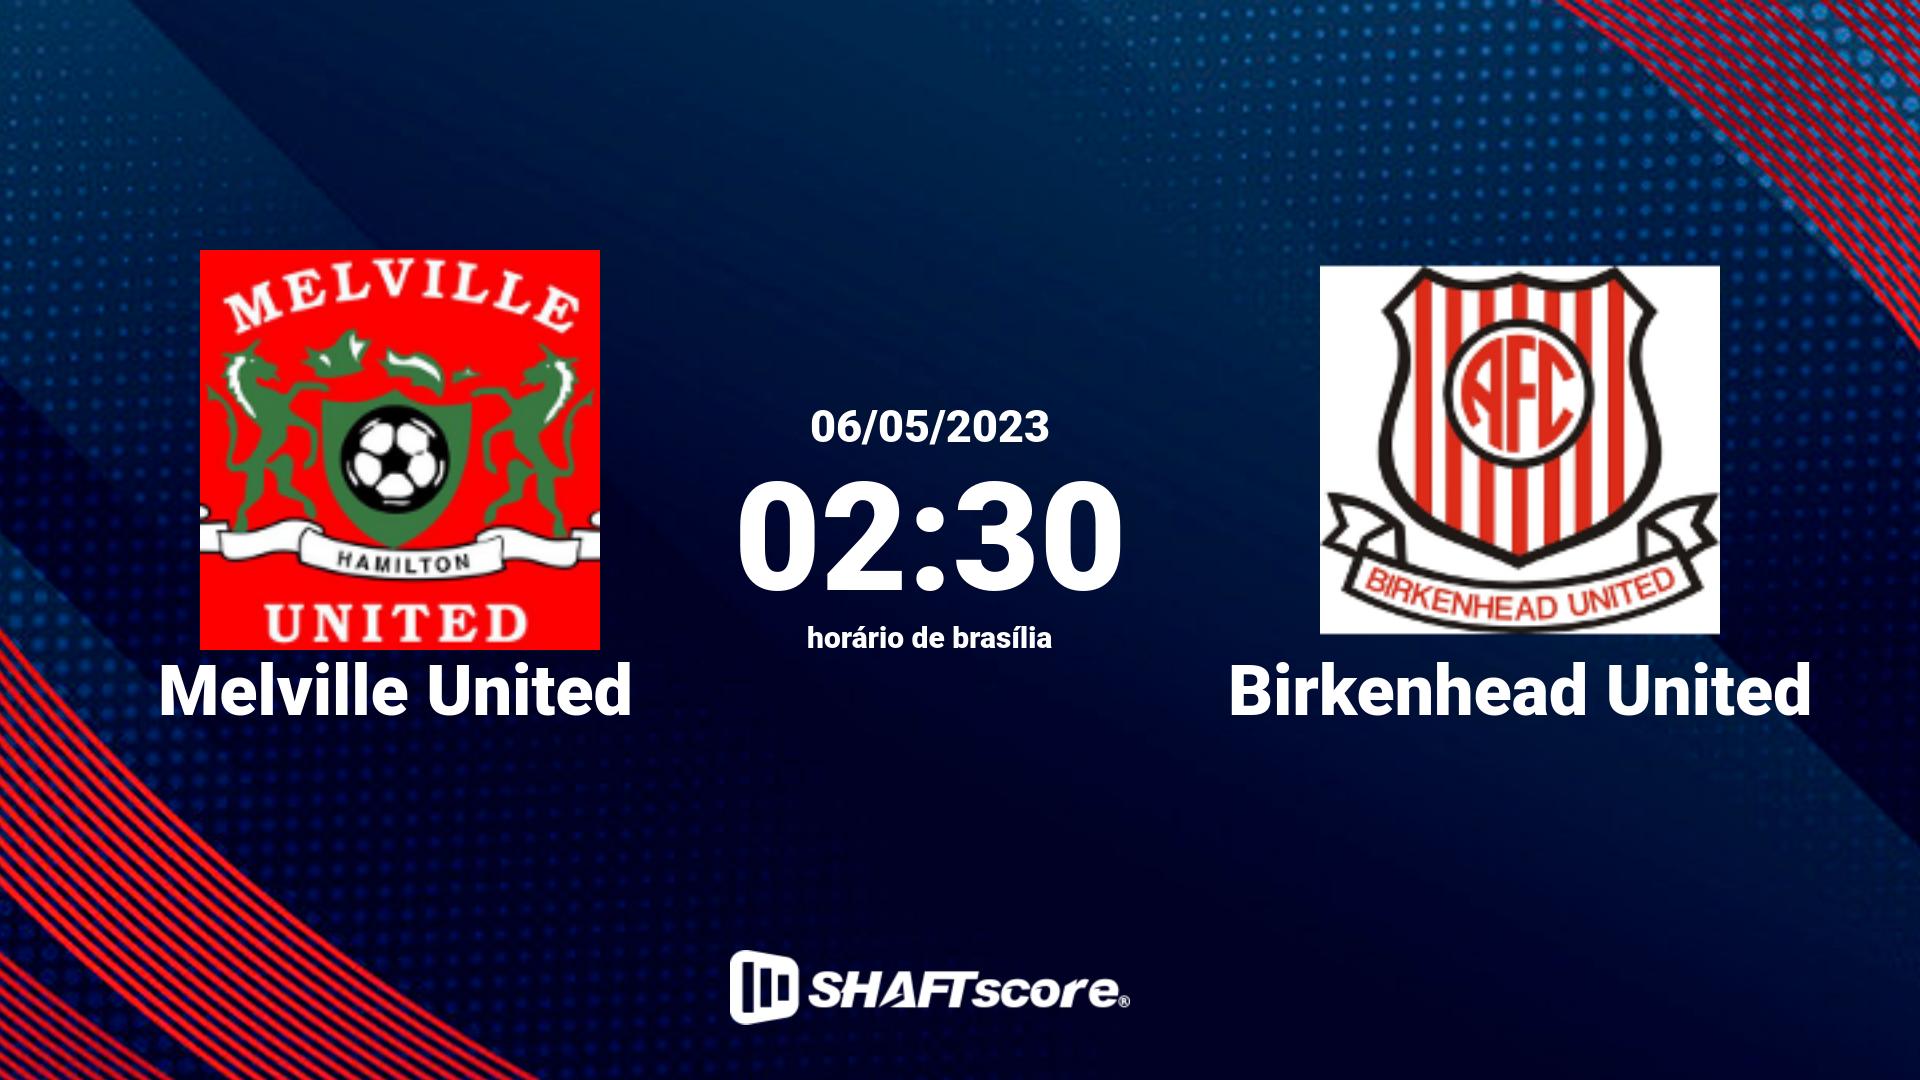 Estatísticas do jogo Melville United vs Birkenhead United 06.05 02:30